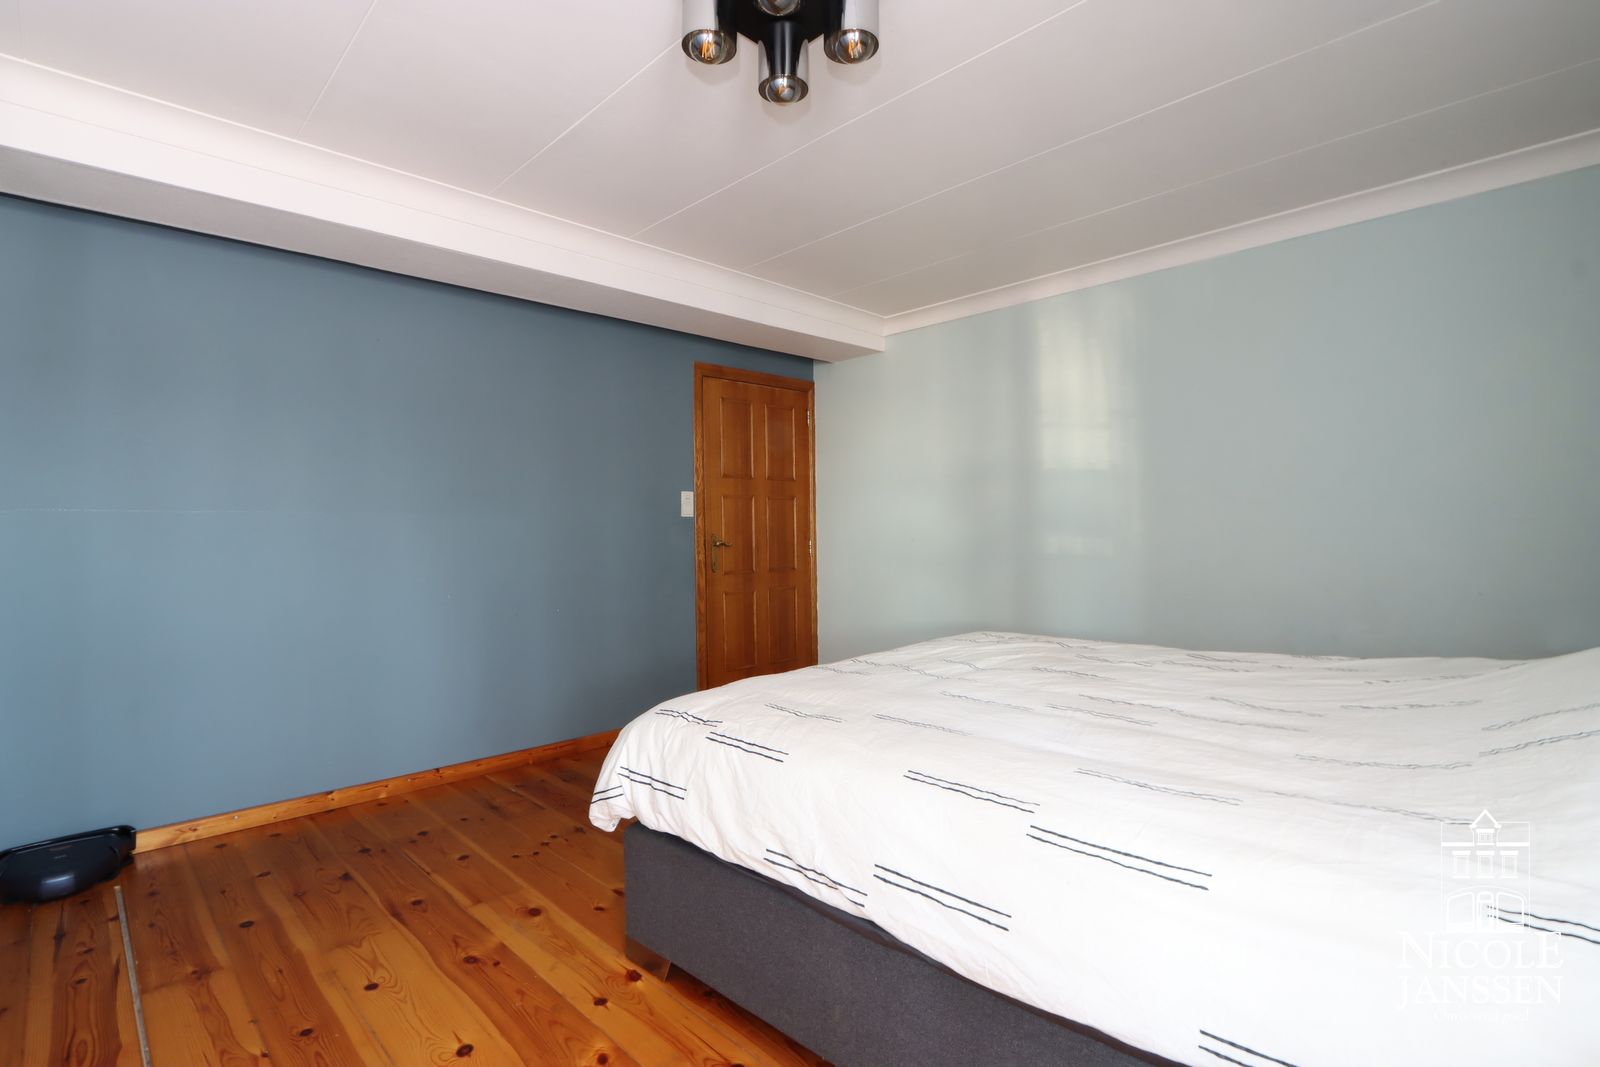 15 Nicole Janssen - huis te koop - Hunselerweg 19 Molenbeersel - slaapkamer.jpg